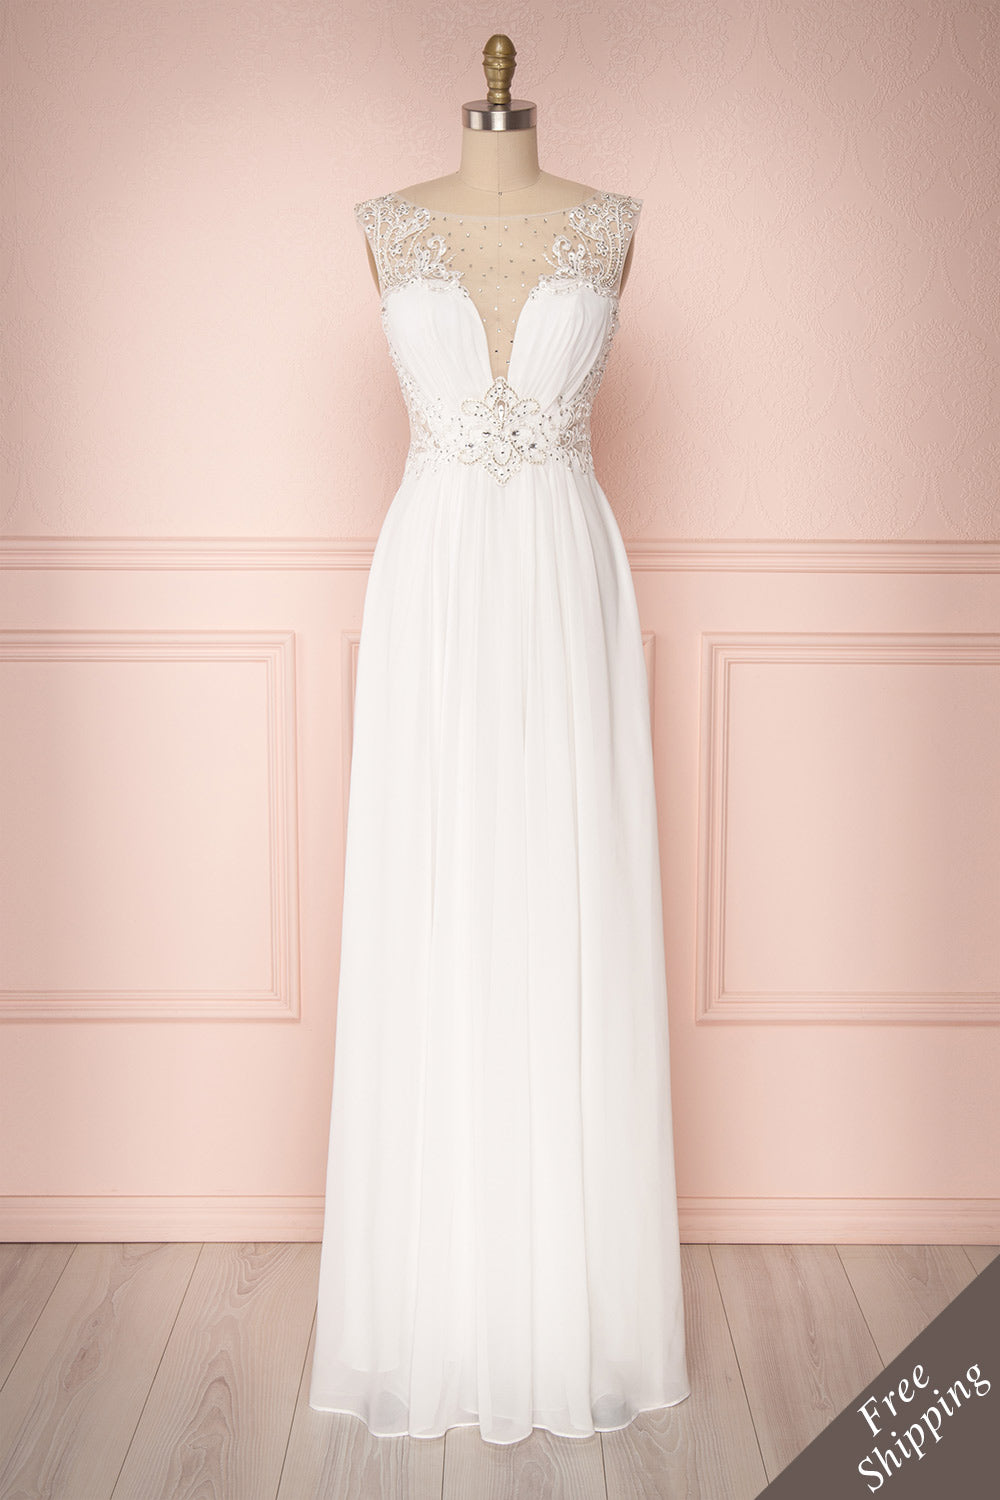 Mary Loraine White Sparkly Chiffon Bridal Dress | Boudoir 1861